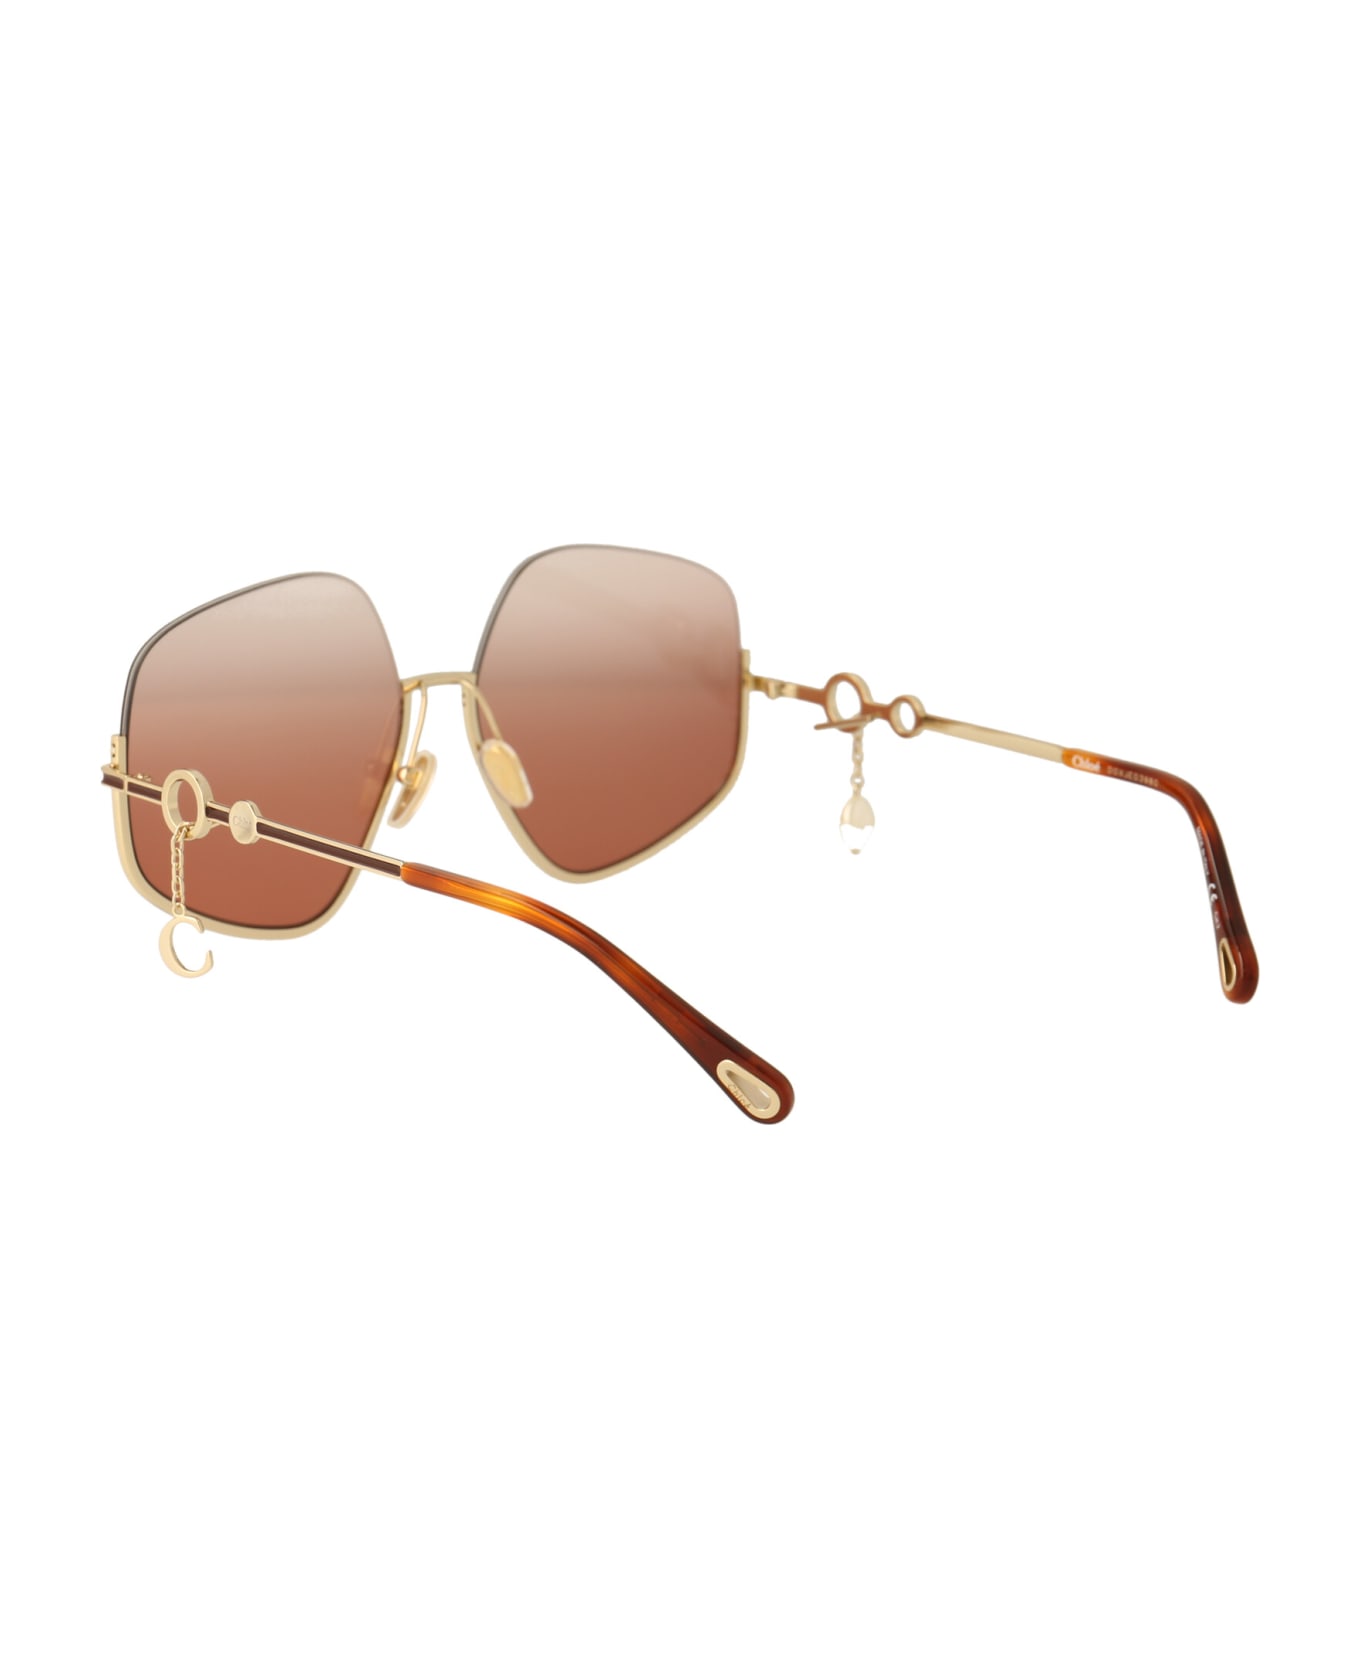 Chloé Eyewear Ch0068s Sunglasses - 002 GOLD GOLD ORANGE